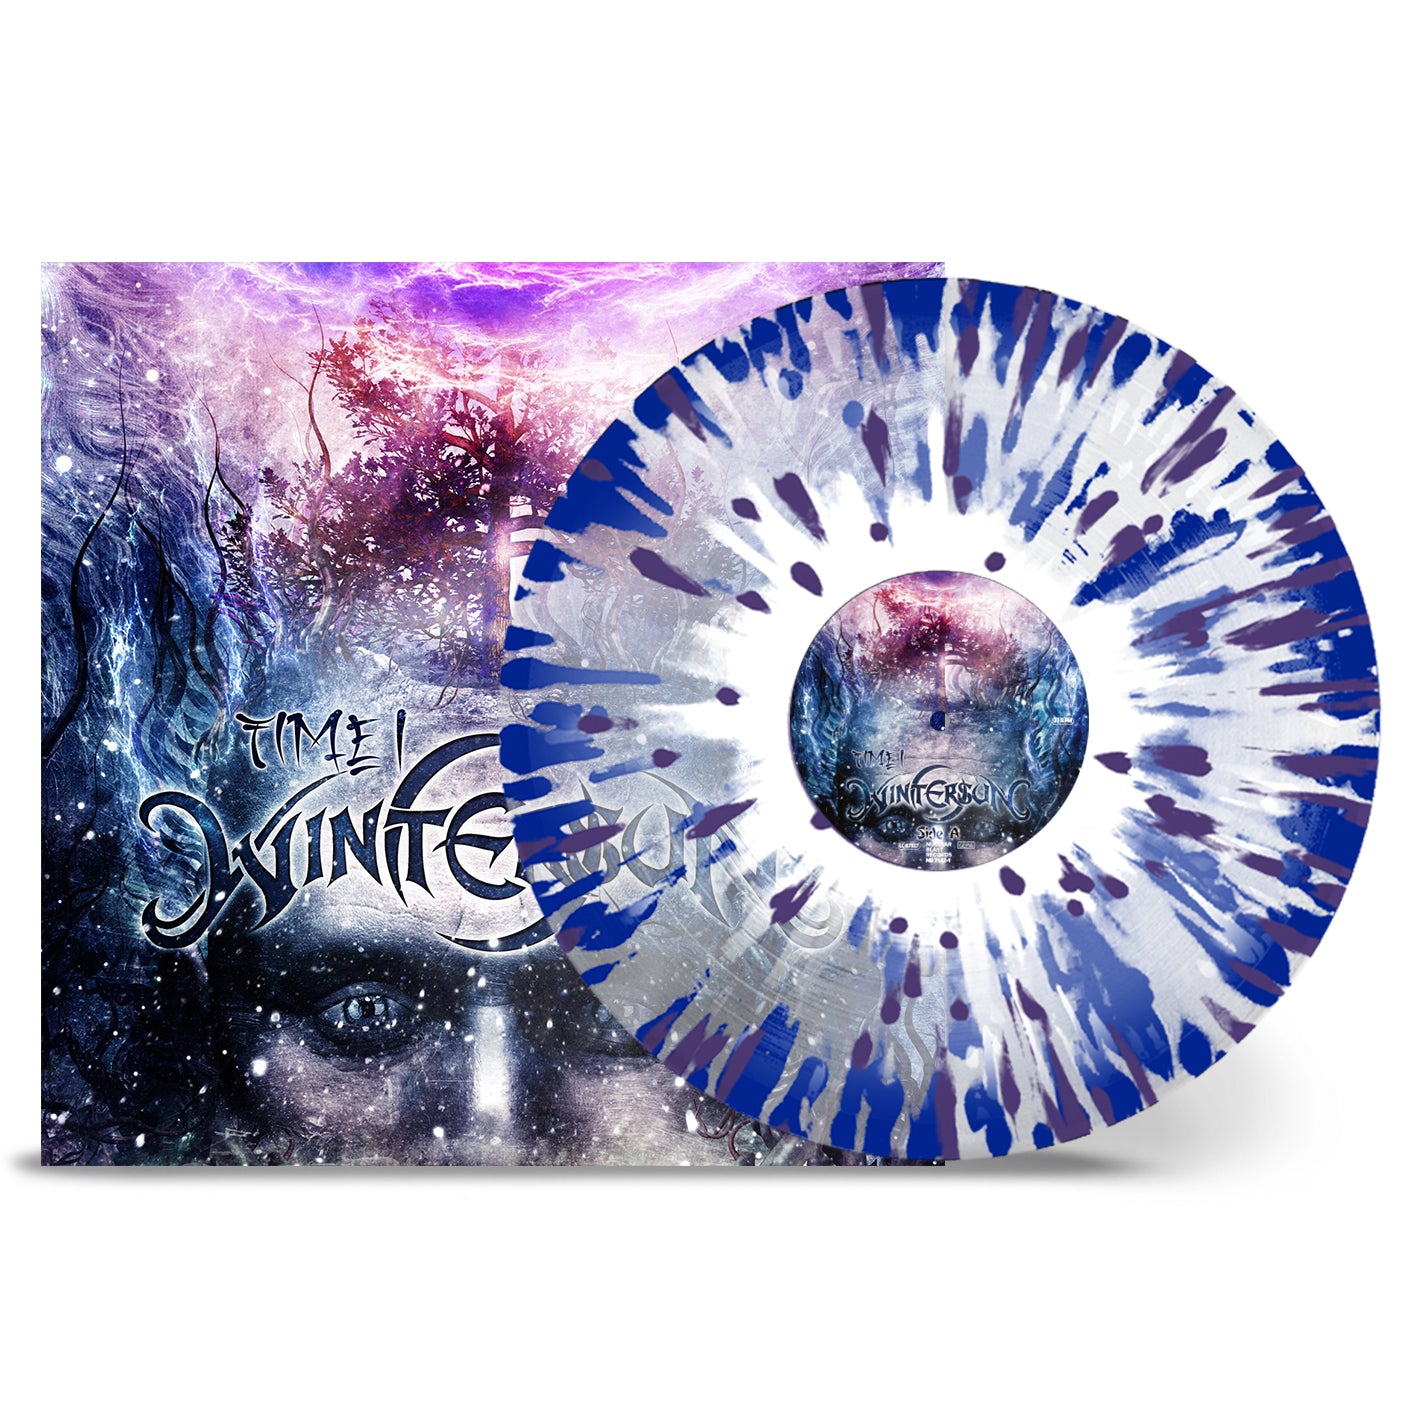 Wintersun "Time I" Clear w/ Blue White Purple Splatter Vinyl - PRE-ORDER